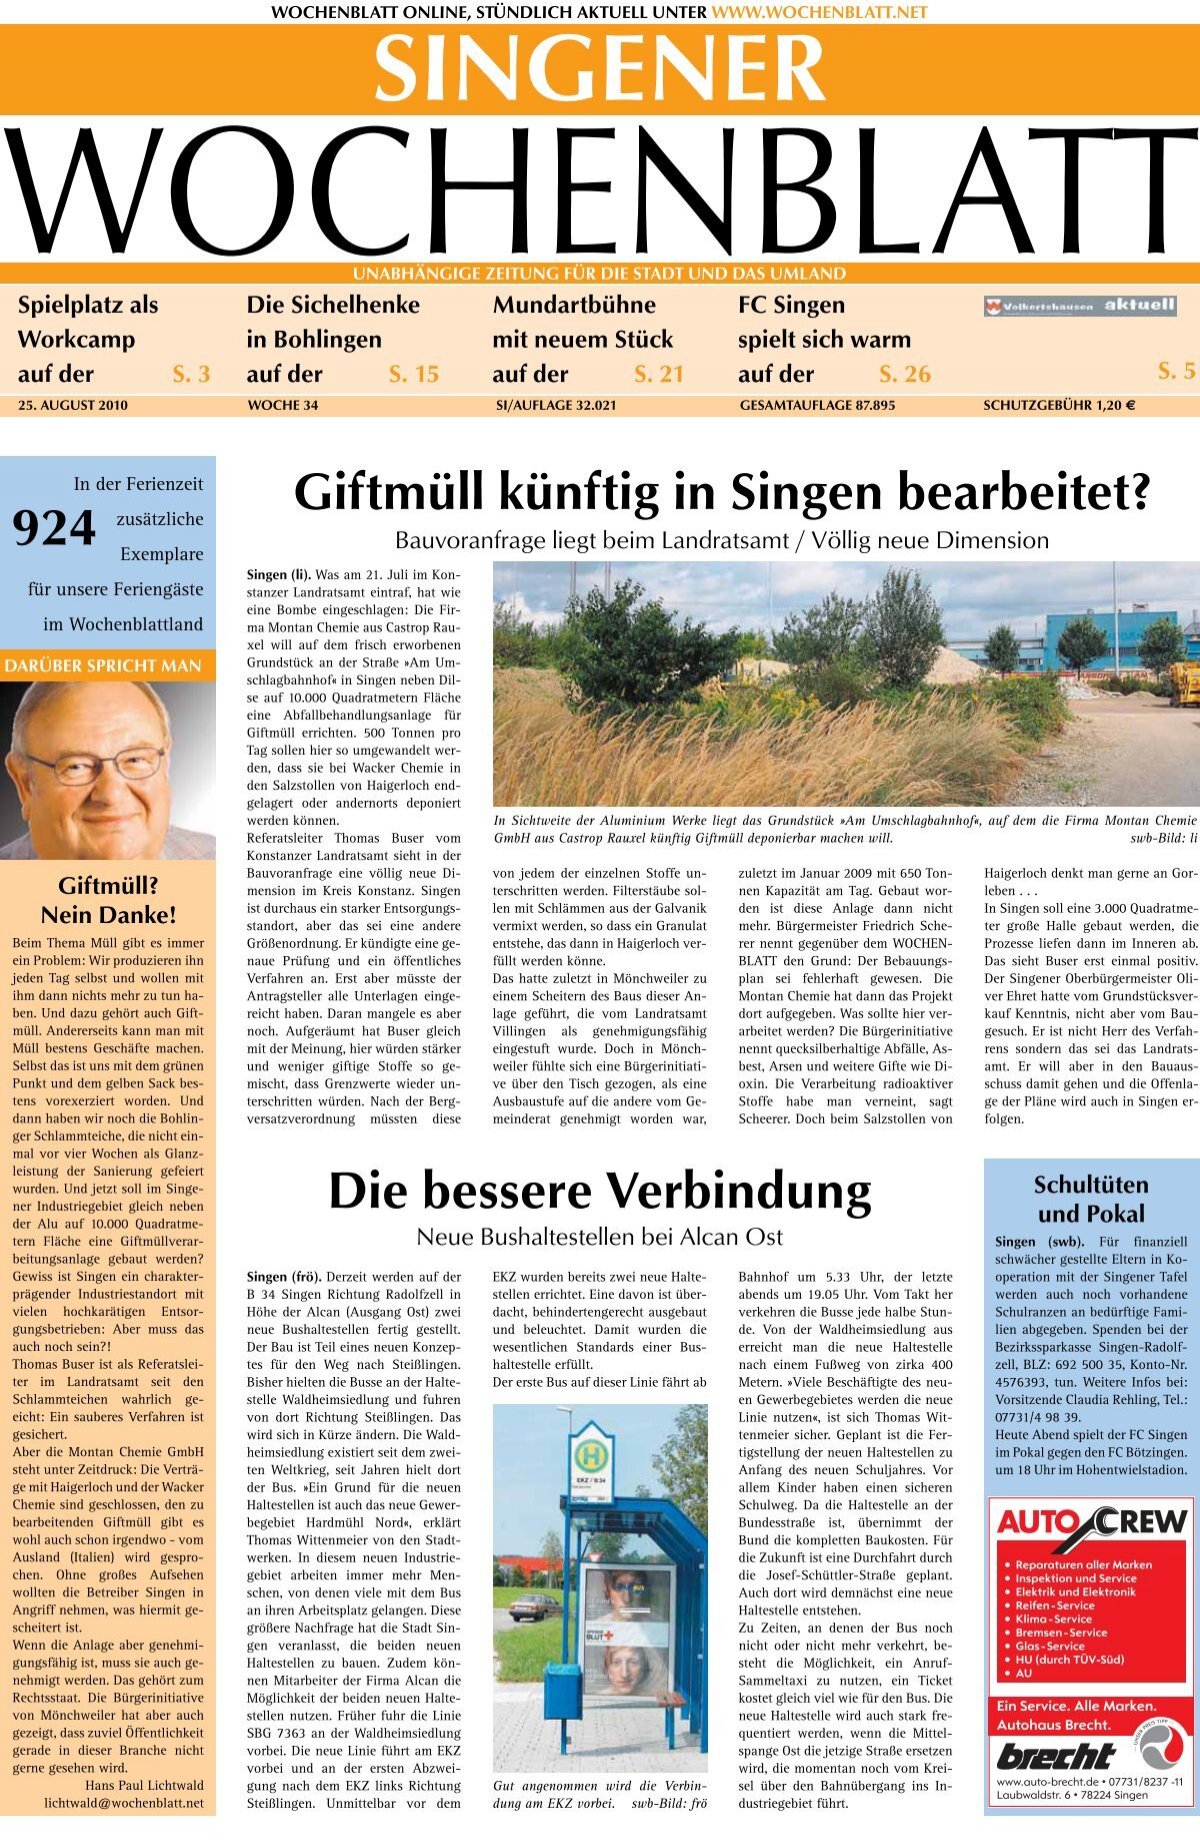 25. Aug. 2010 - Singener Wochenblatt